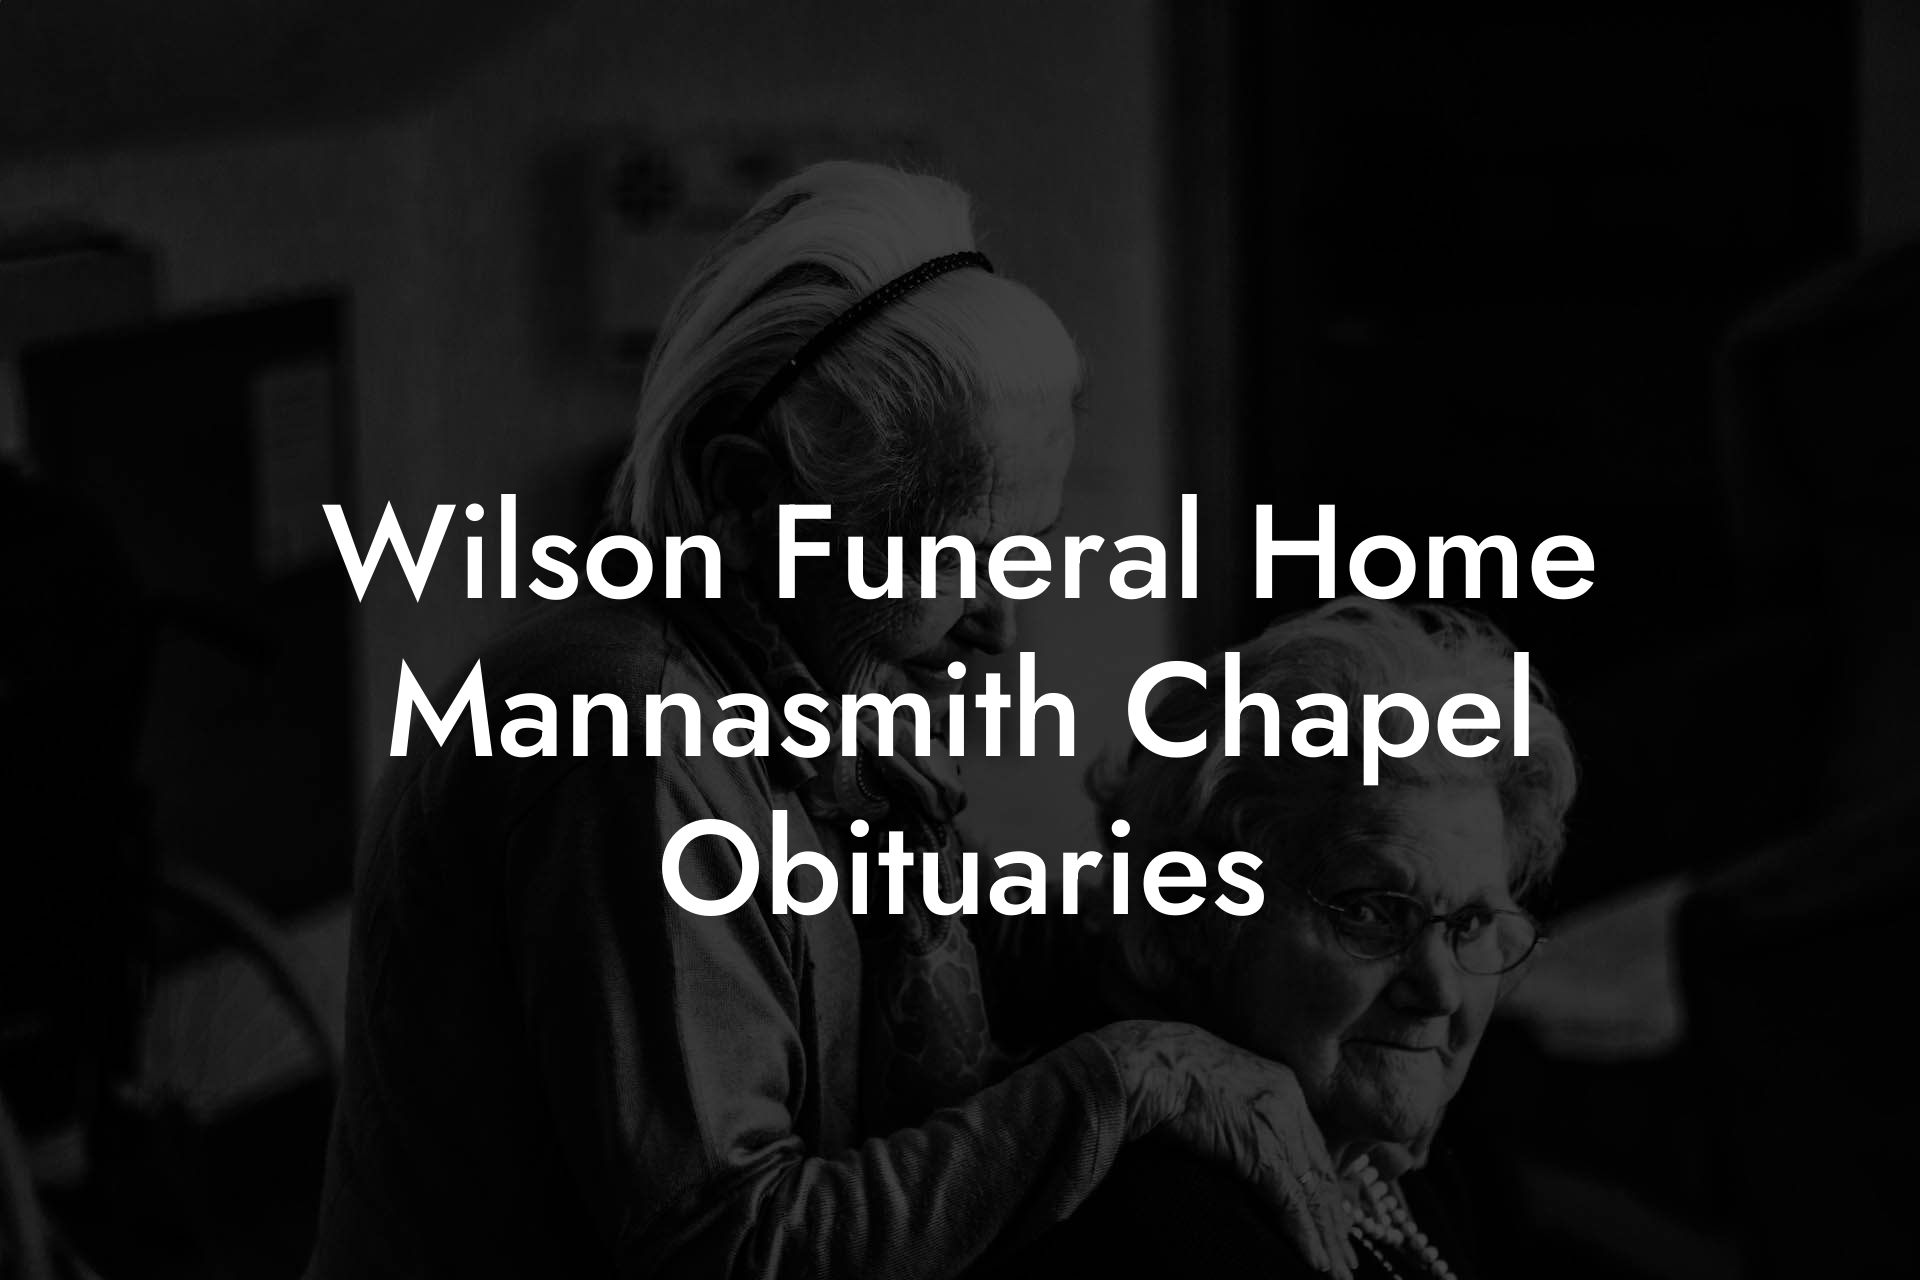 Wilson Funeral Home Mannasmith Chapel Obituaries